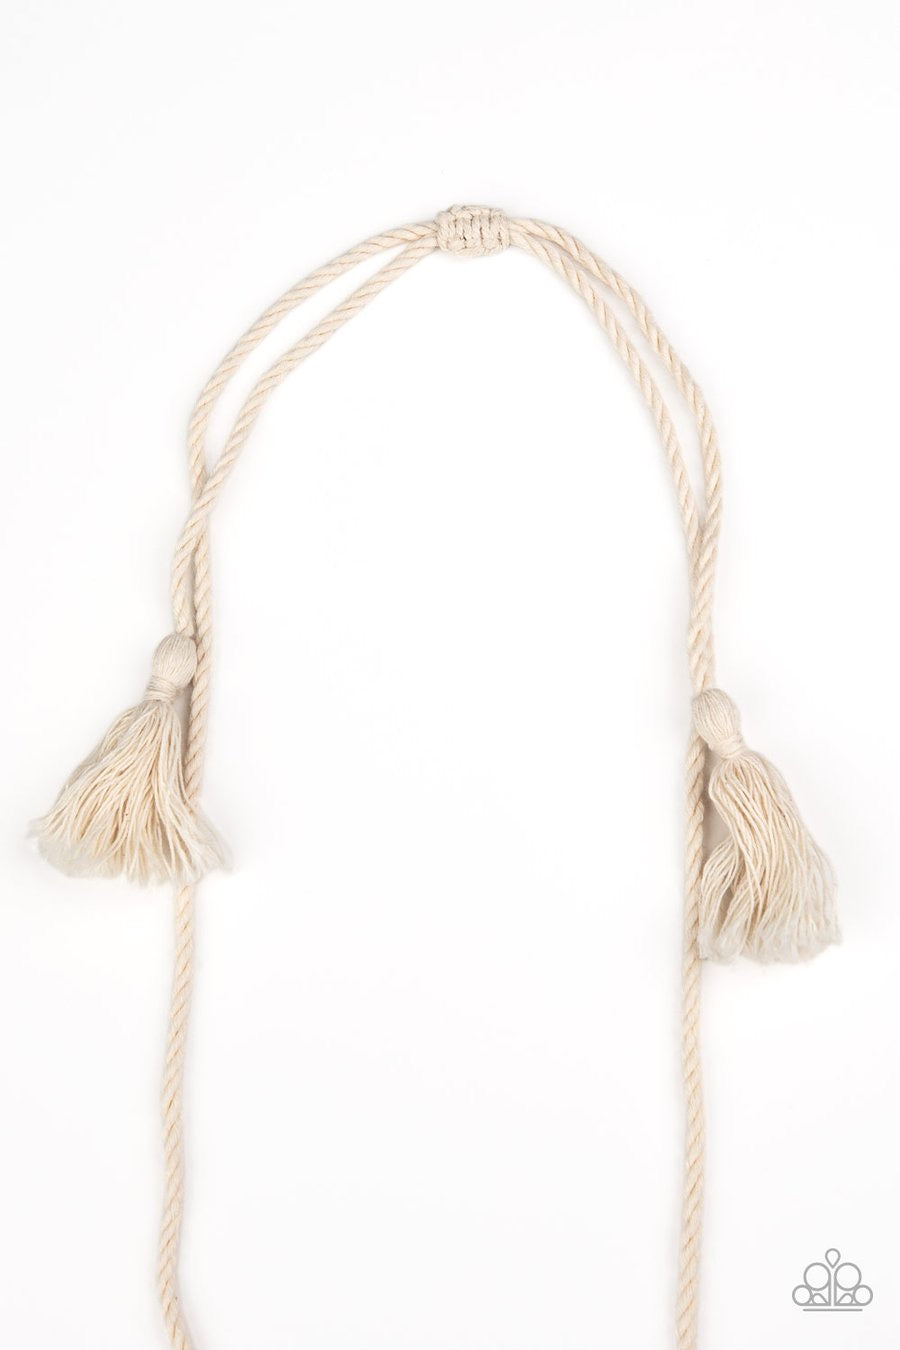 Macrame Mantra - White Necklace